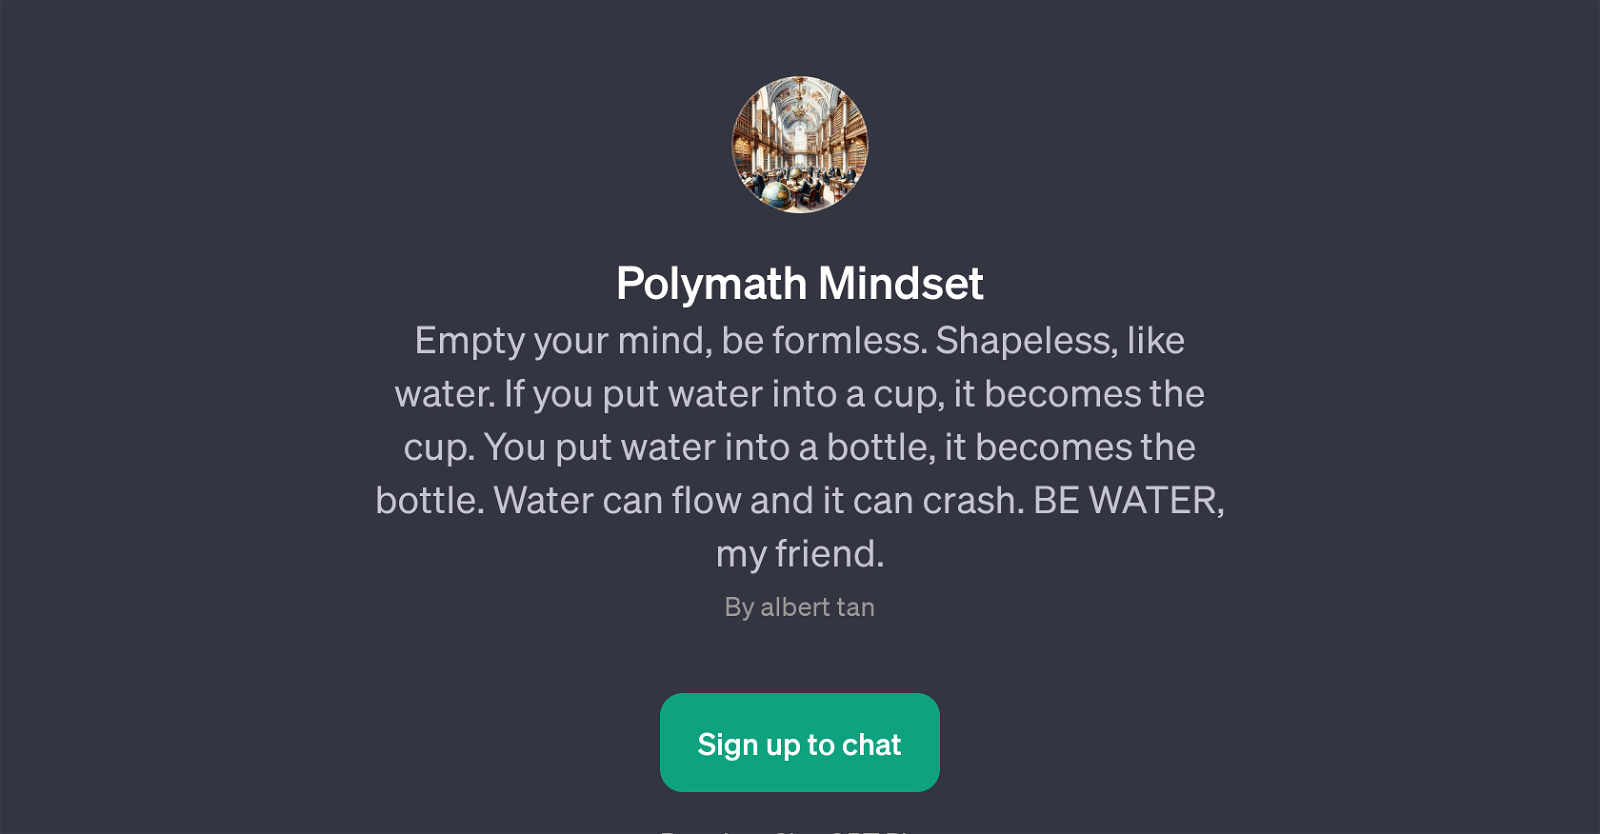 Polymath Mindset website